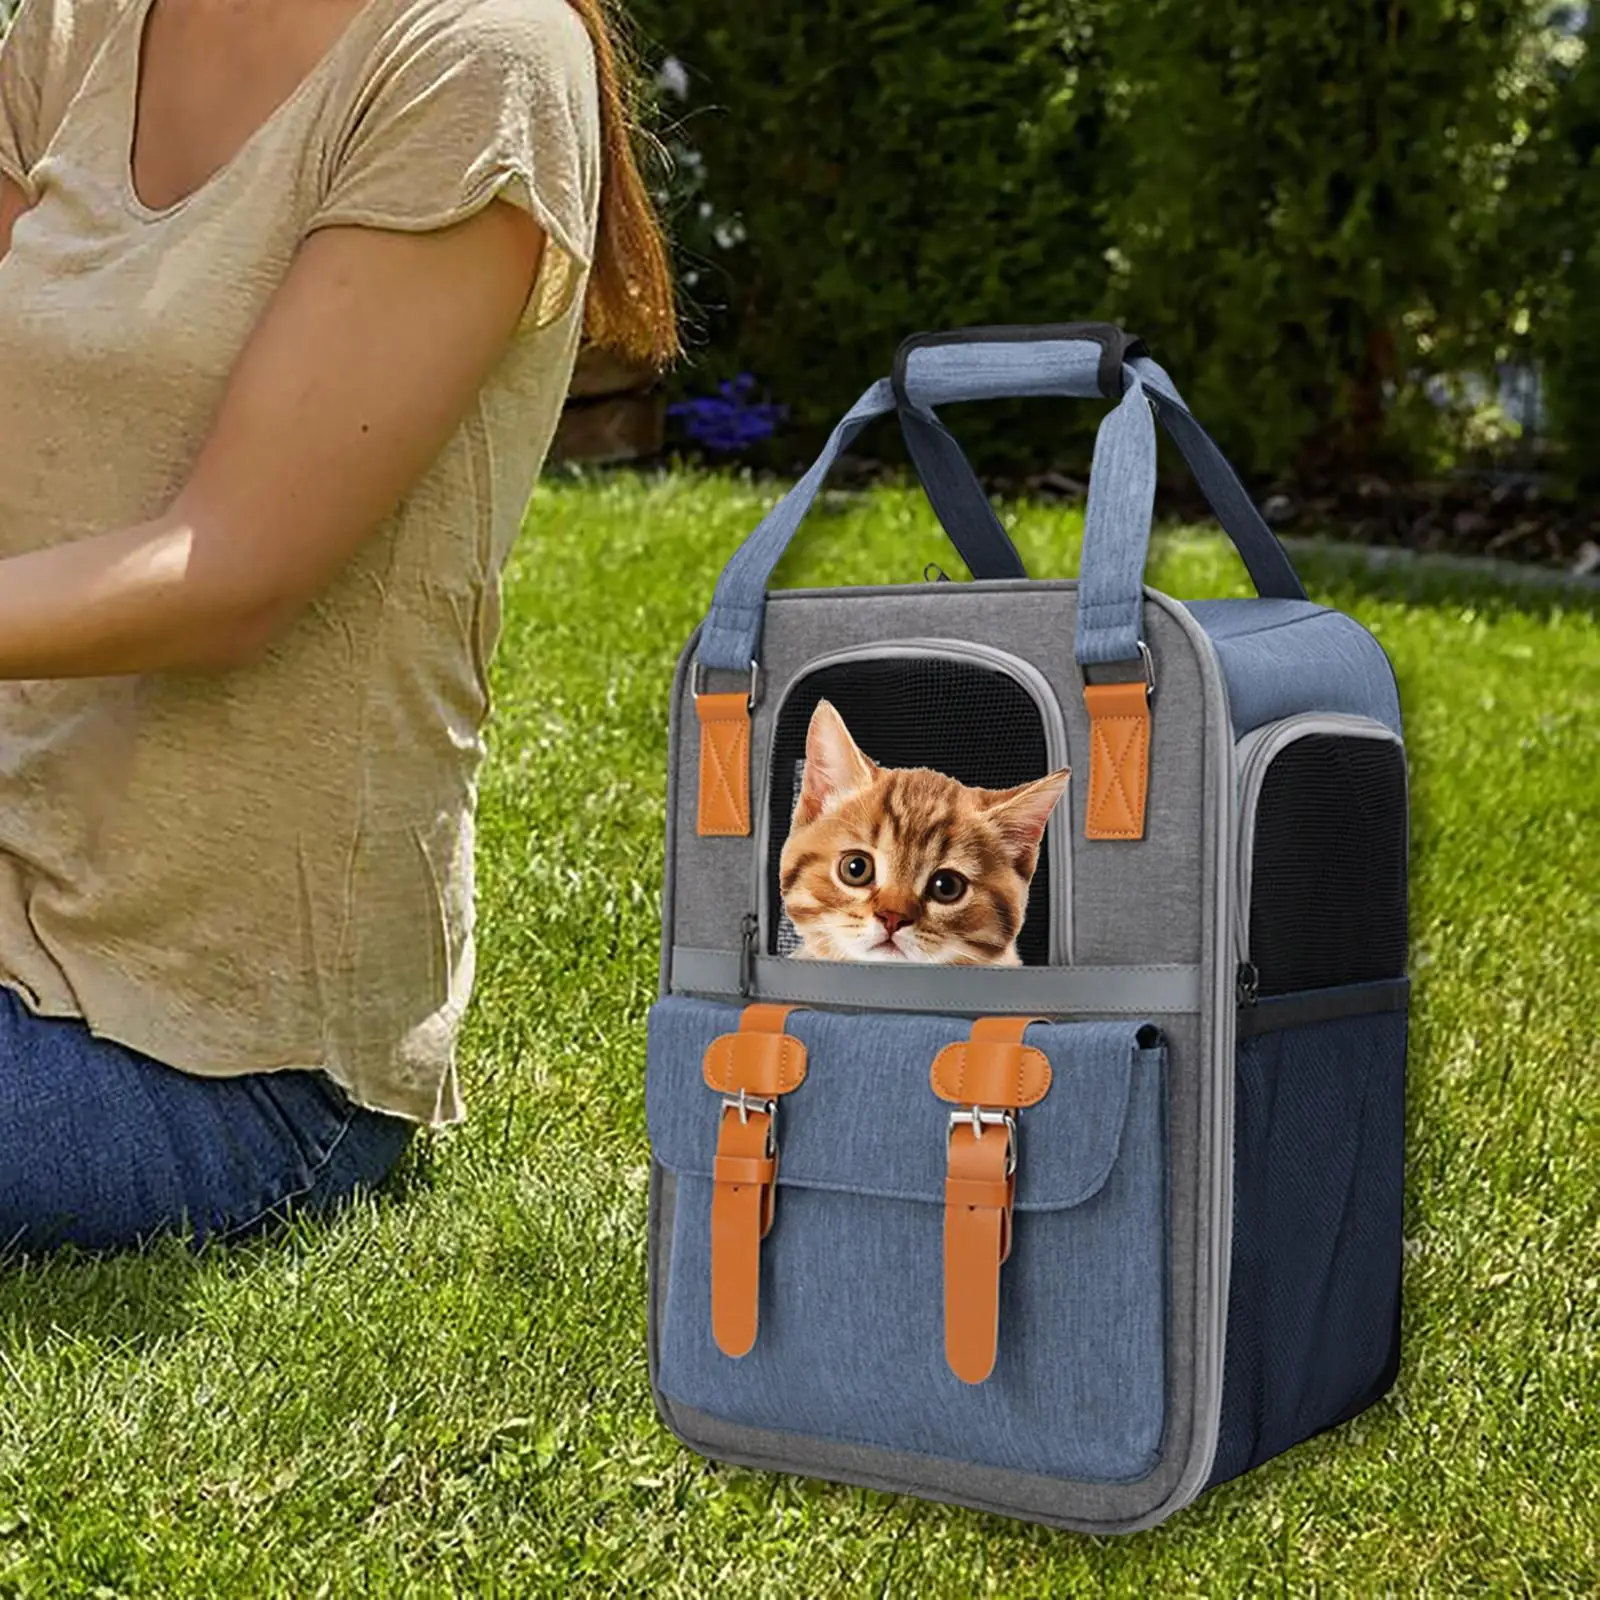 Portable Pet Cat Carrier Backpack Dog Travel Bag Shoulder Strap Kitten Tote Carrying Bag Breathable for Traveling Hiking Camping